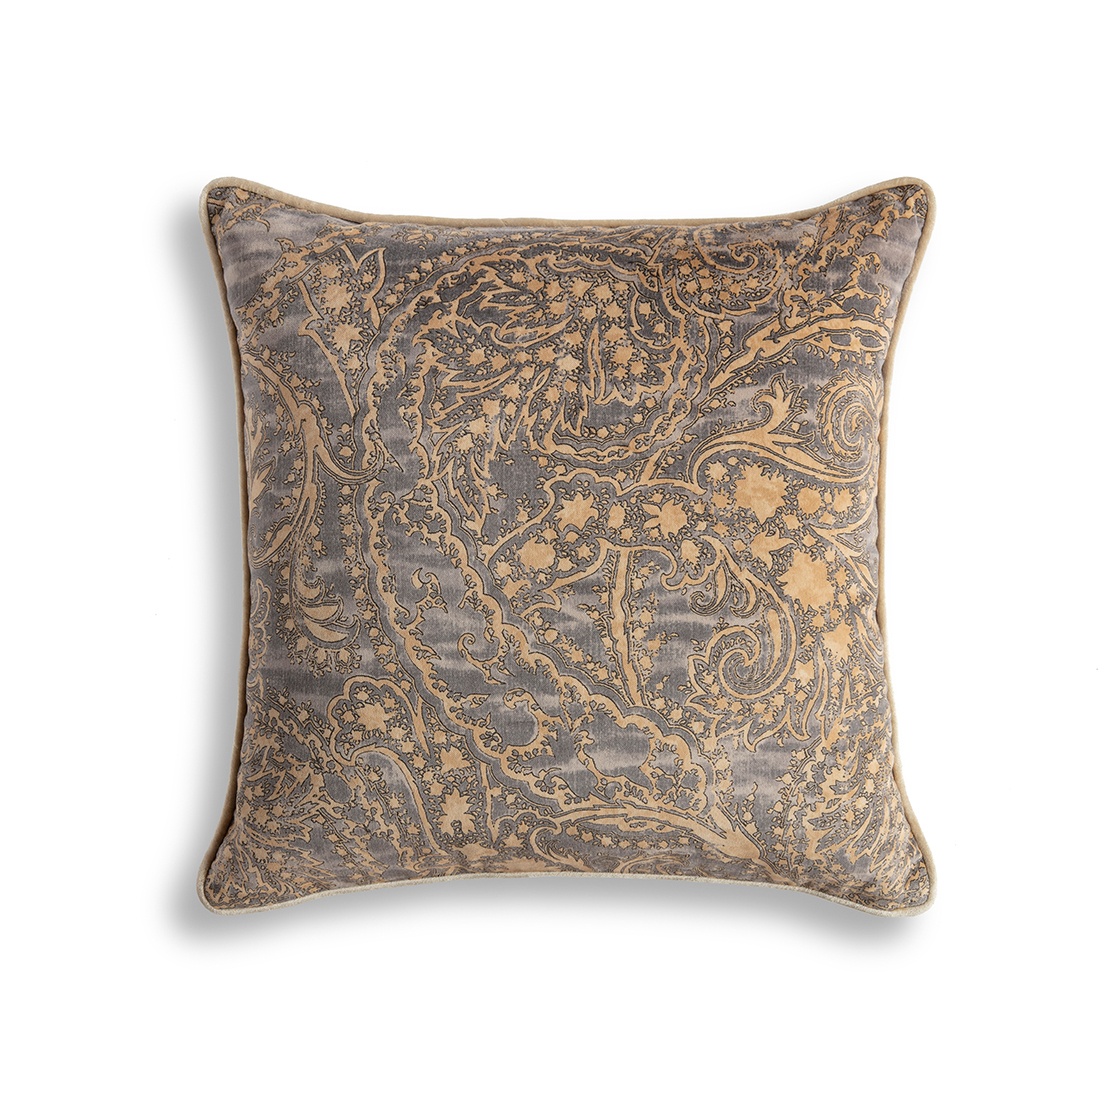 Balthazar Classic cushion in Dusk and Capri - Charcoal back - Beaumont & Fletcher